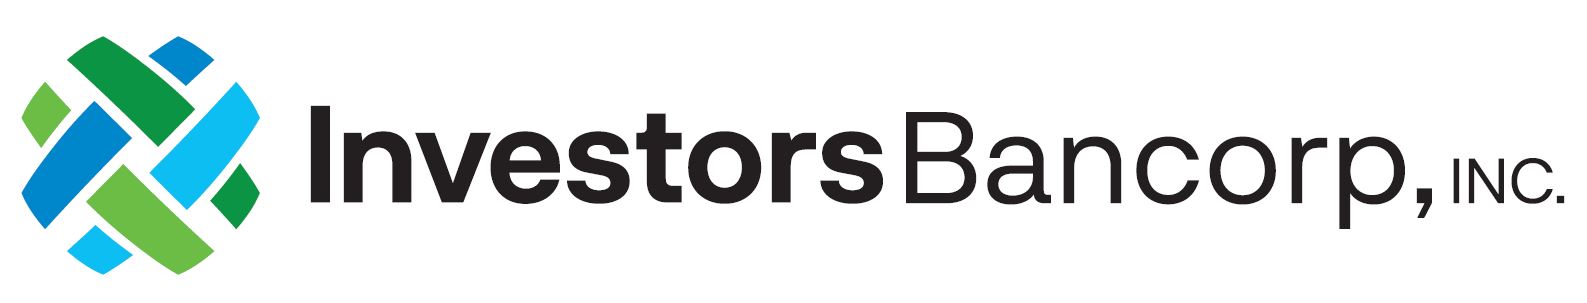 investorsbancorp_logo.jpg